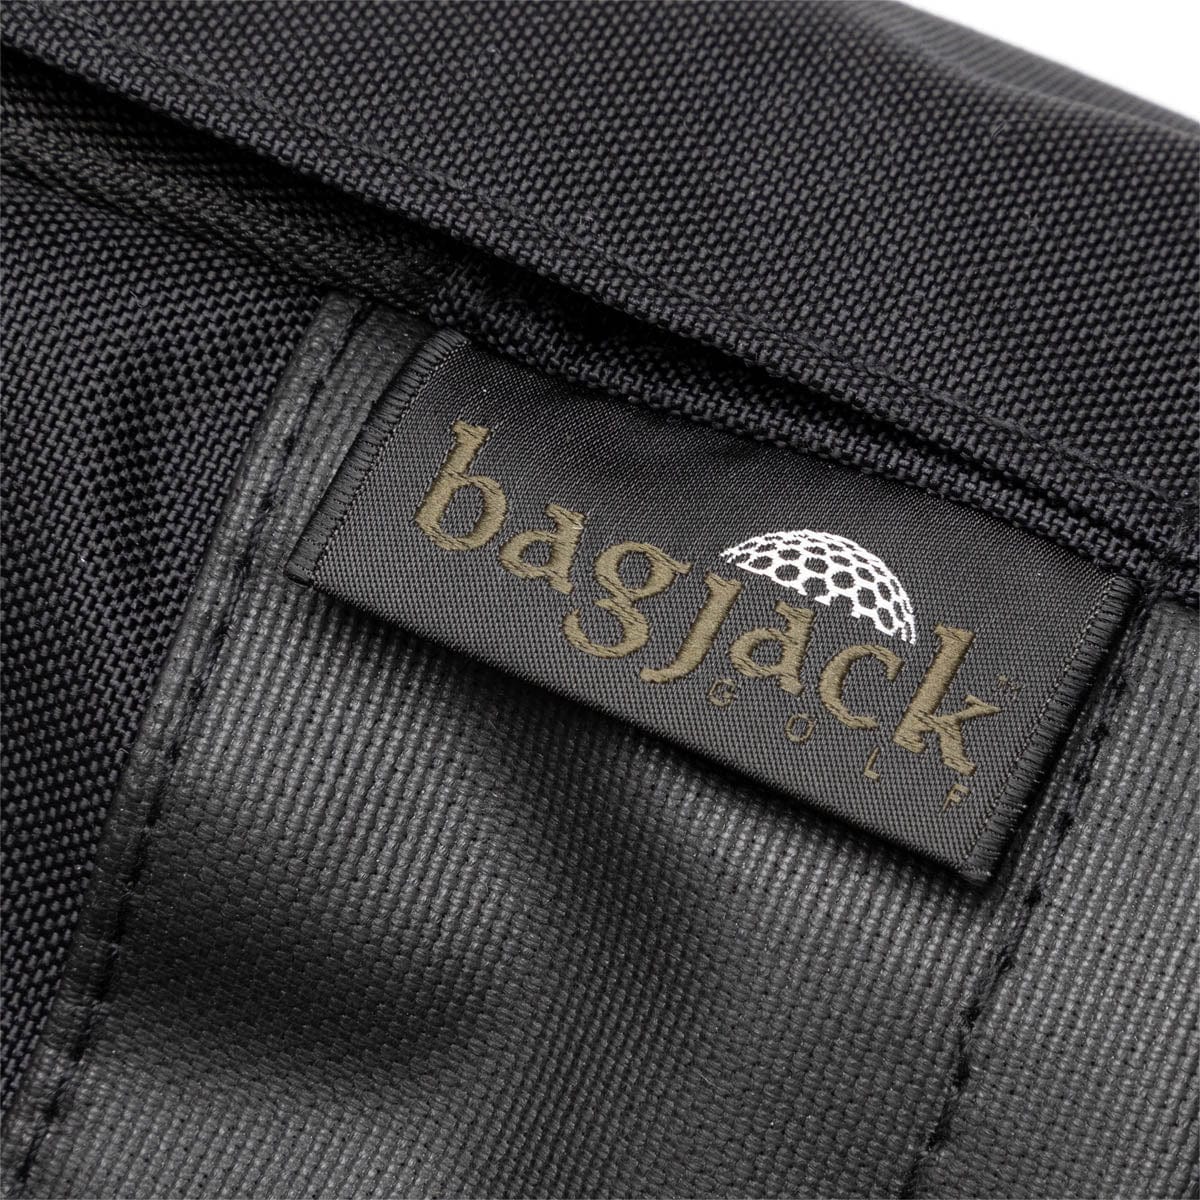 bagjack GOLF Golf BLACK/OLIVE / O/S IRON COVER